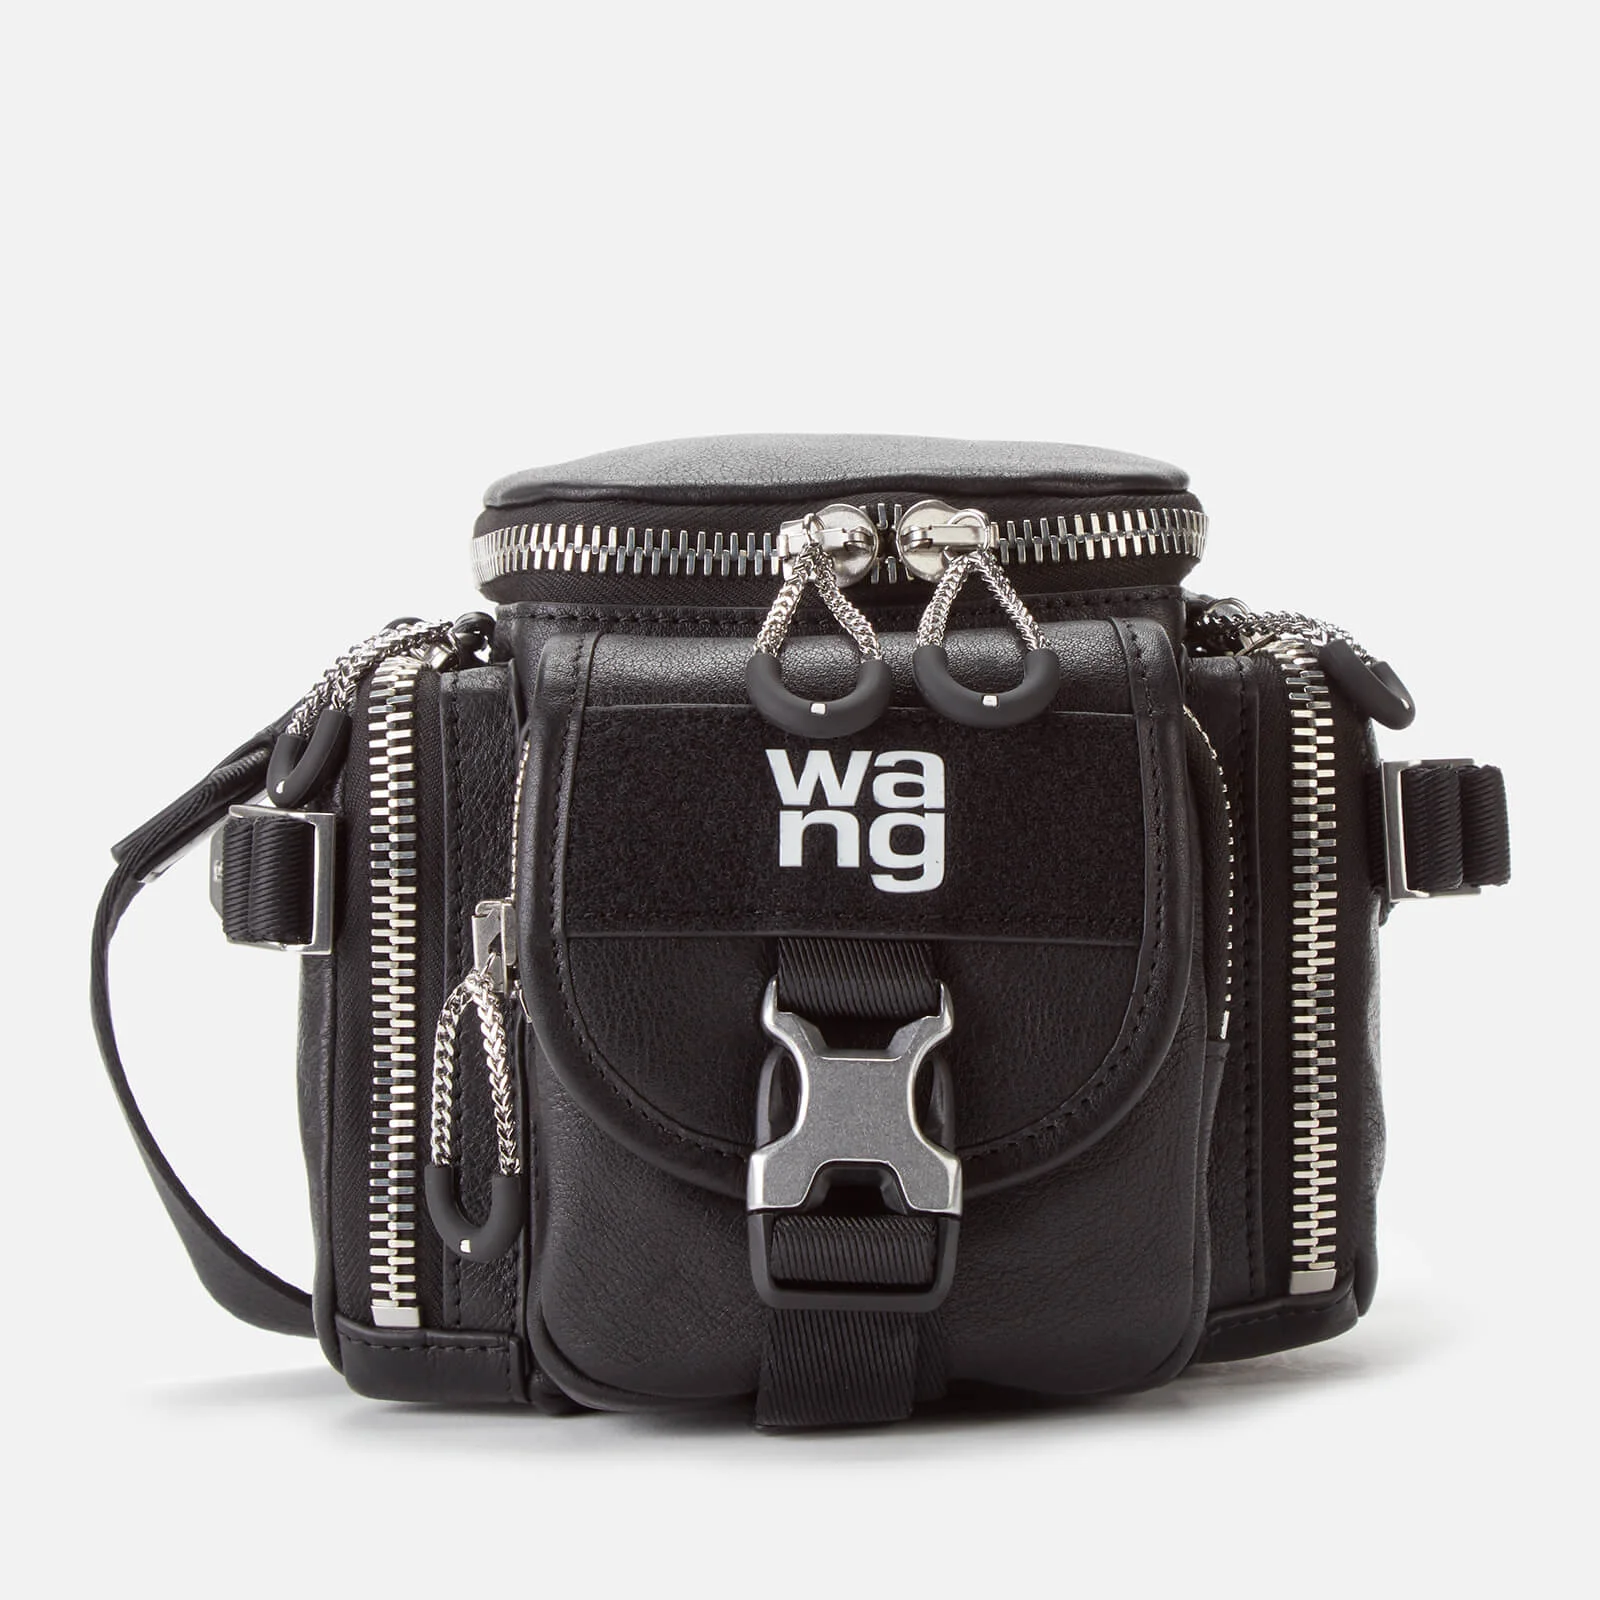 Alexander Wang Women's Surplus Camera Bag - Black Image 1